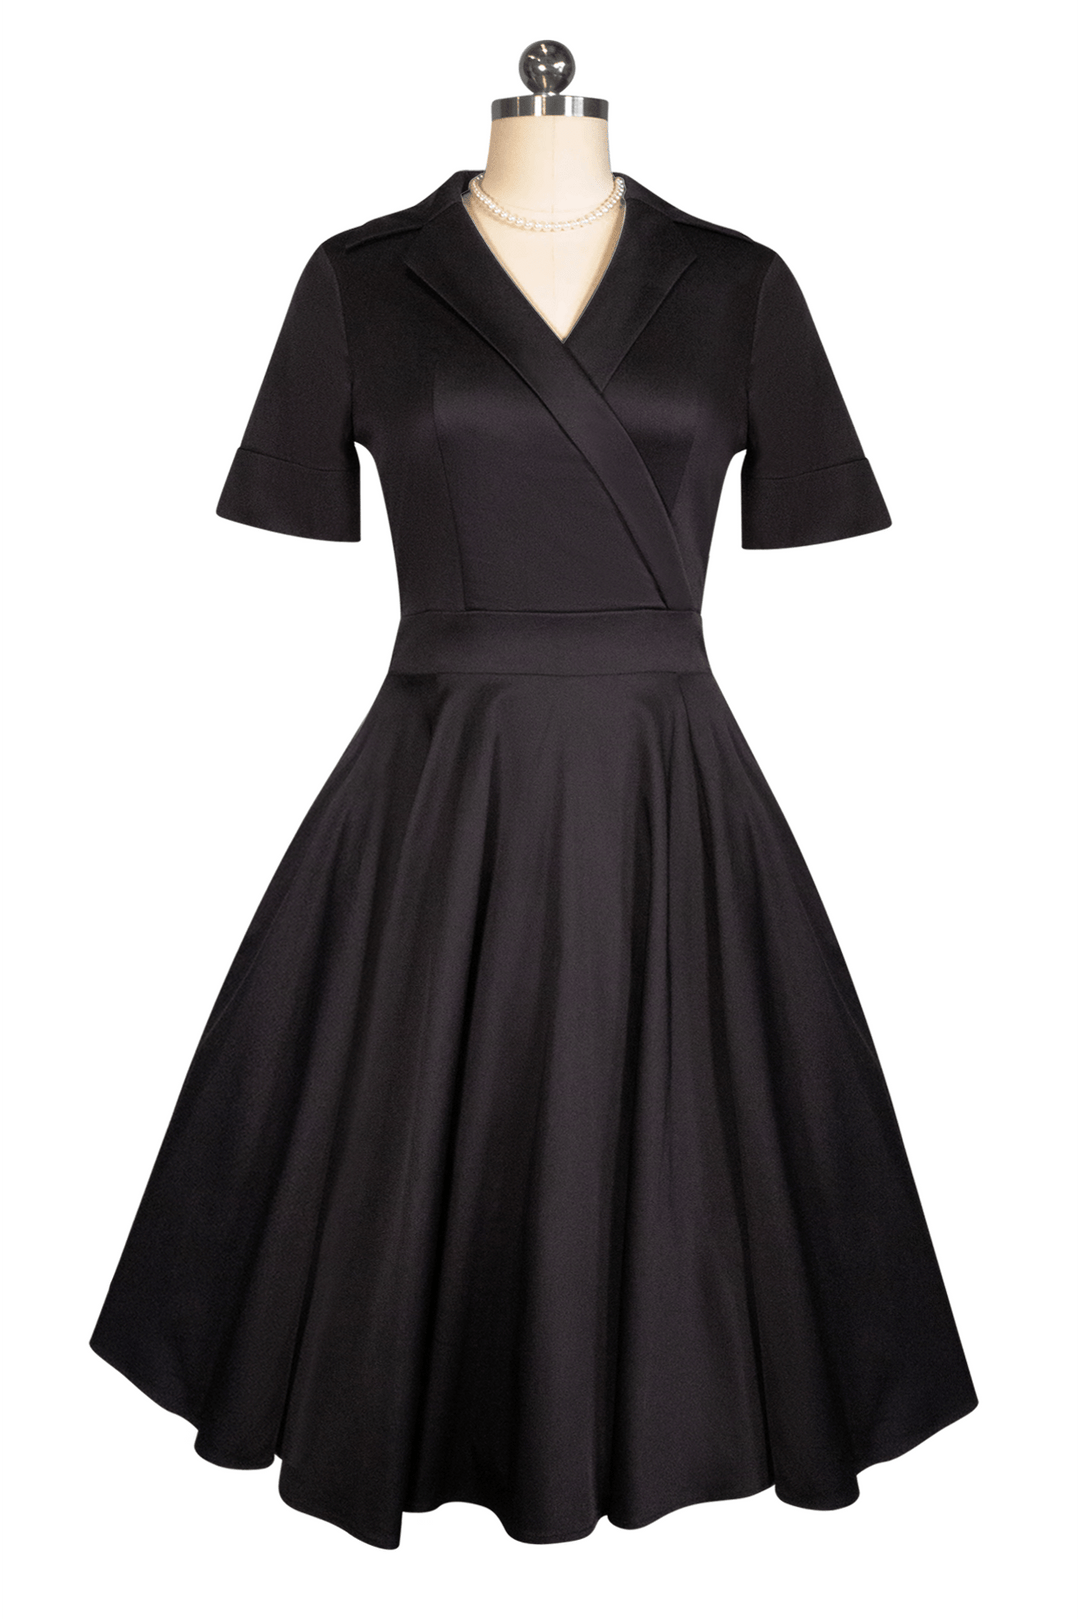 Tea Rose Collar Dress (Black) - Kitten D'Amour